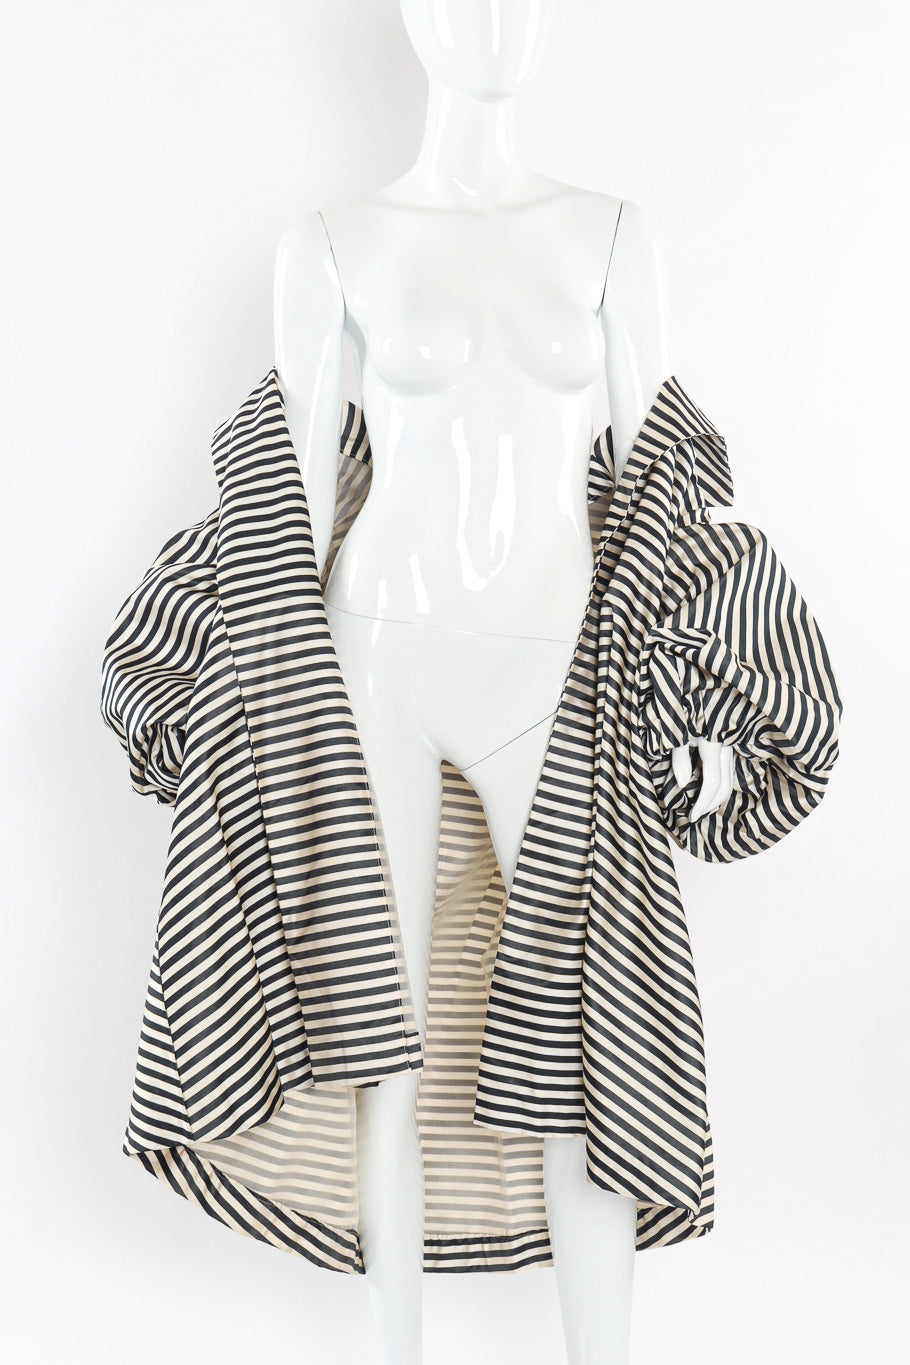 Oversized striped swing coat by Carolyne Roehm Off Shoulder View @recessla